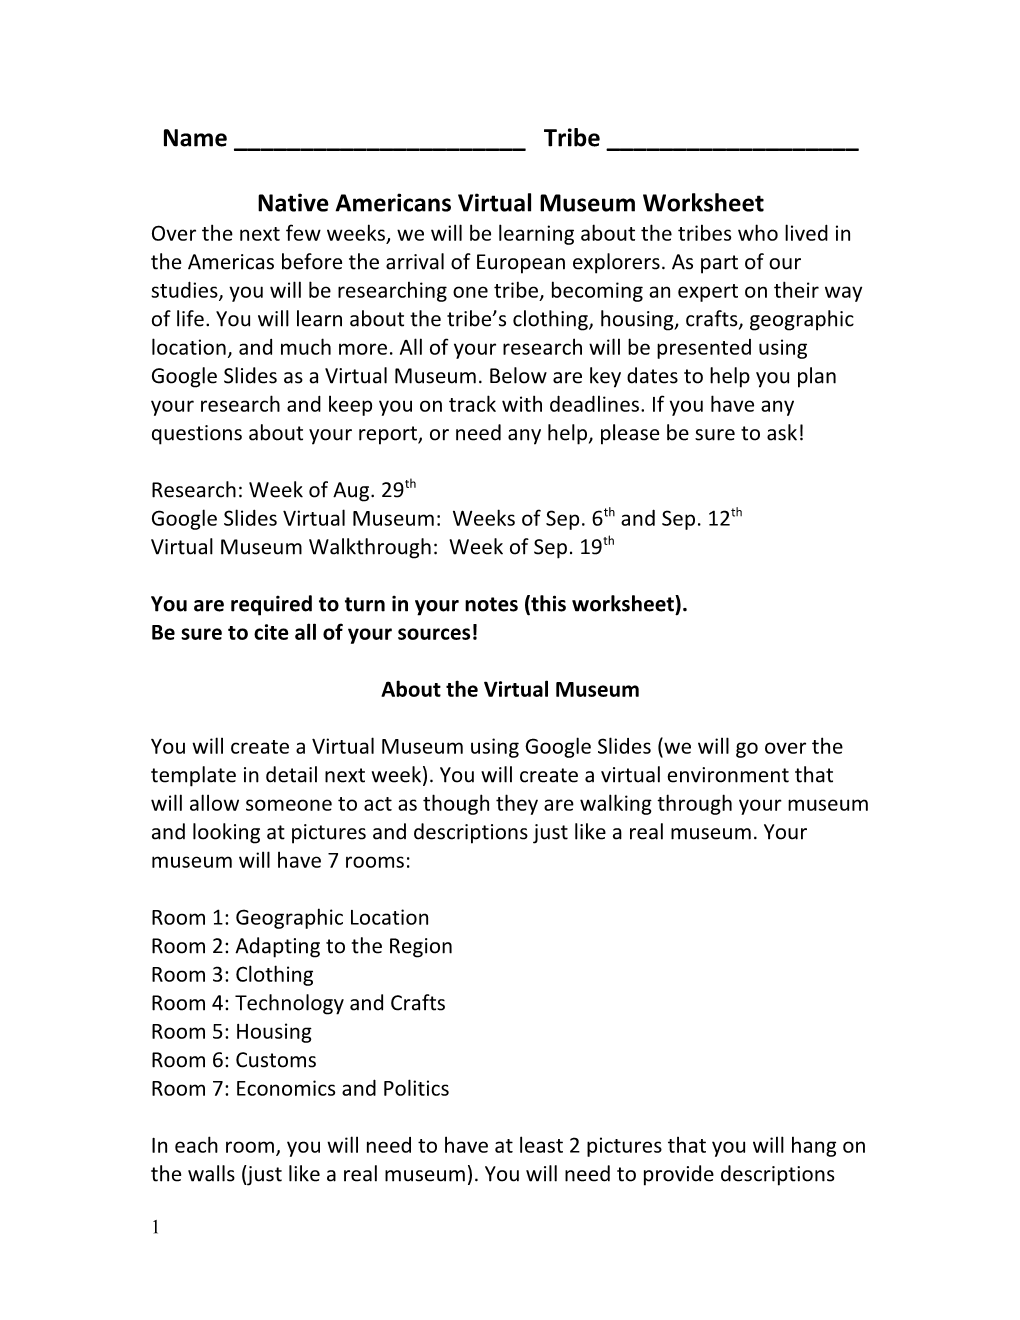 Native Americans Virtual Museum Worksheet